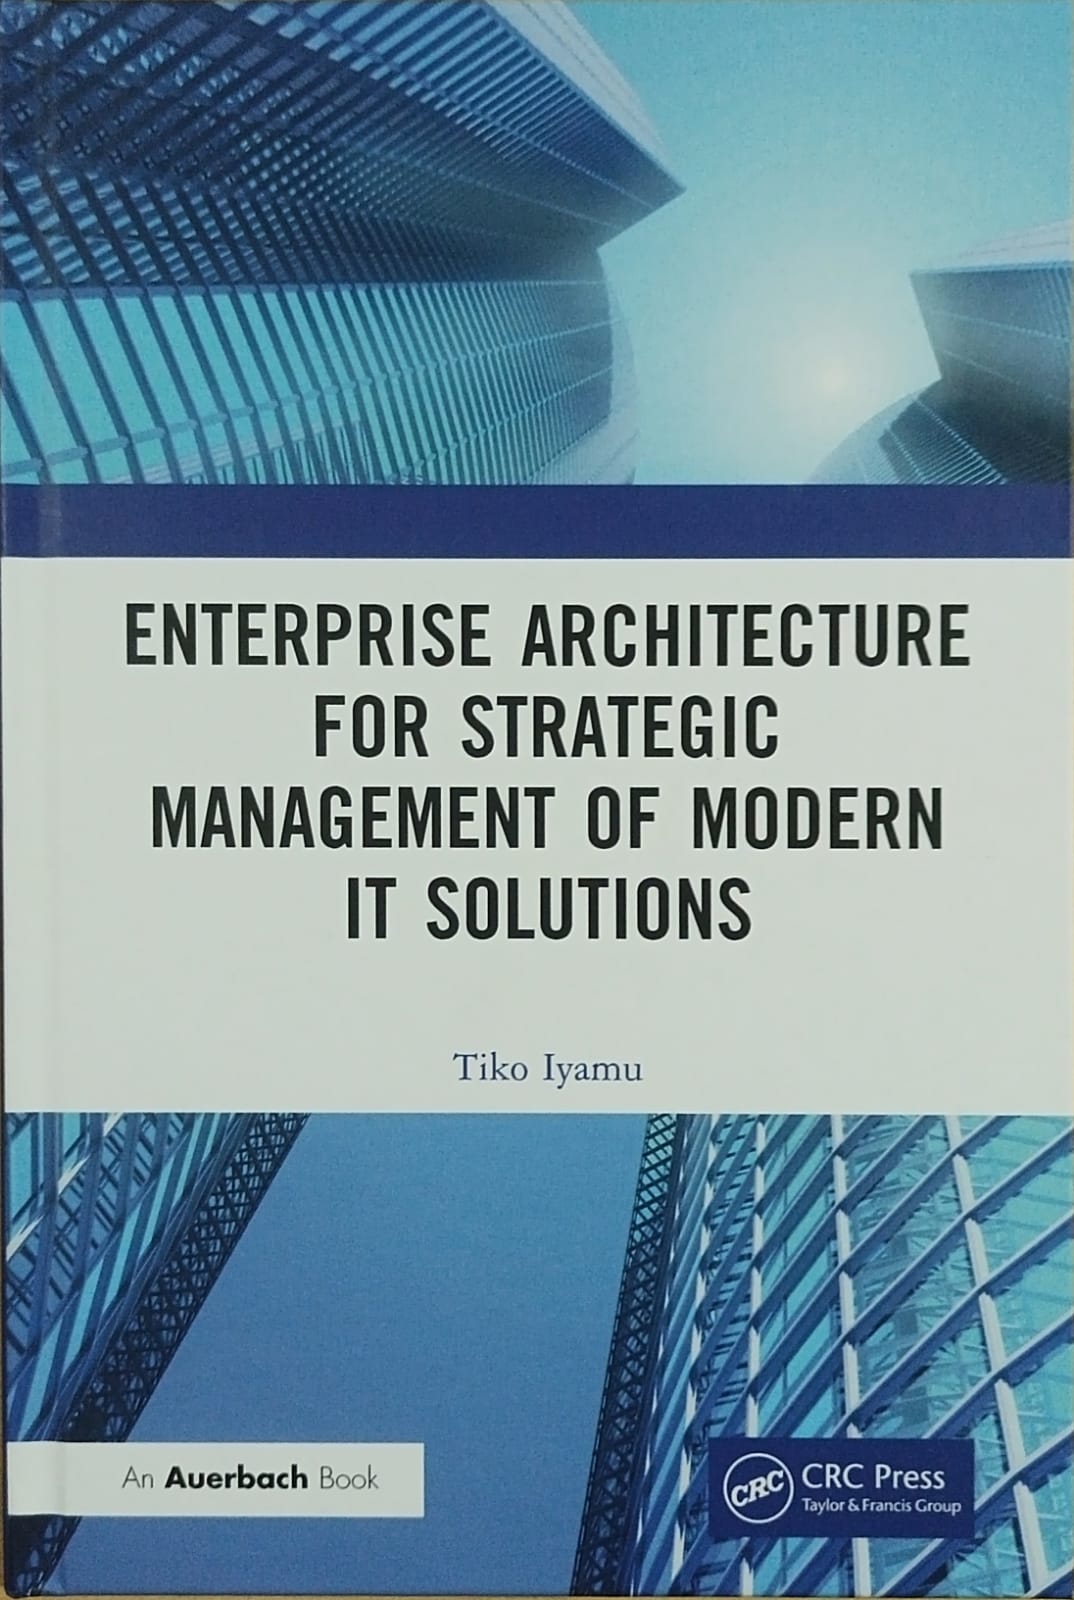 Enterprise architecture for strategic management of modern IT solutions